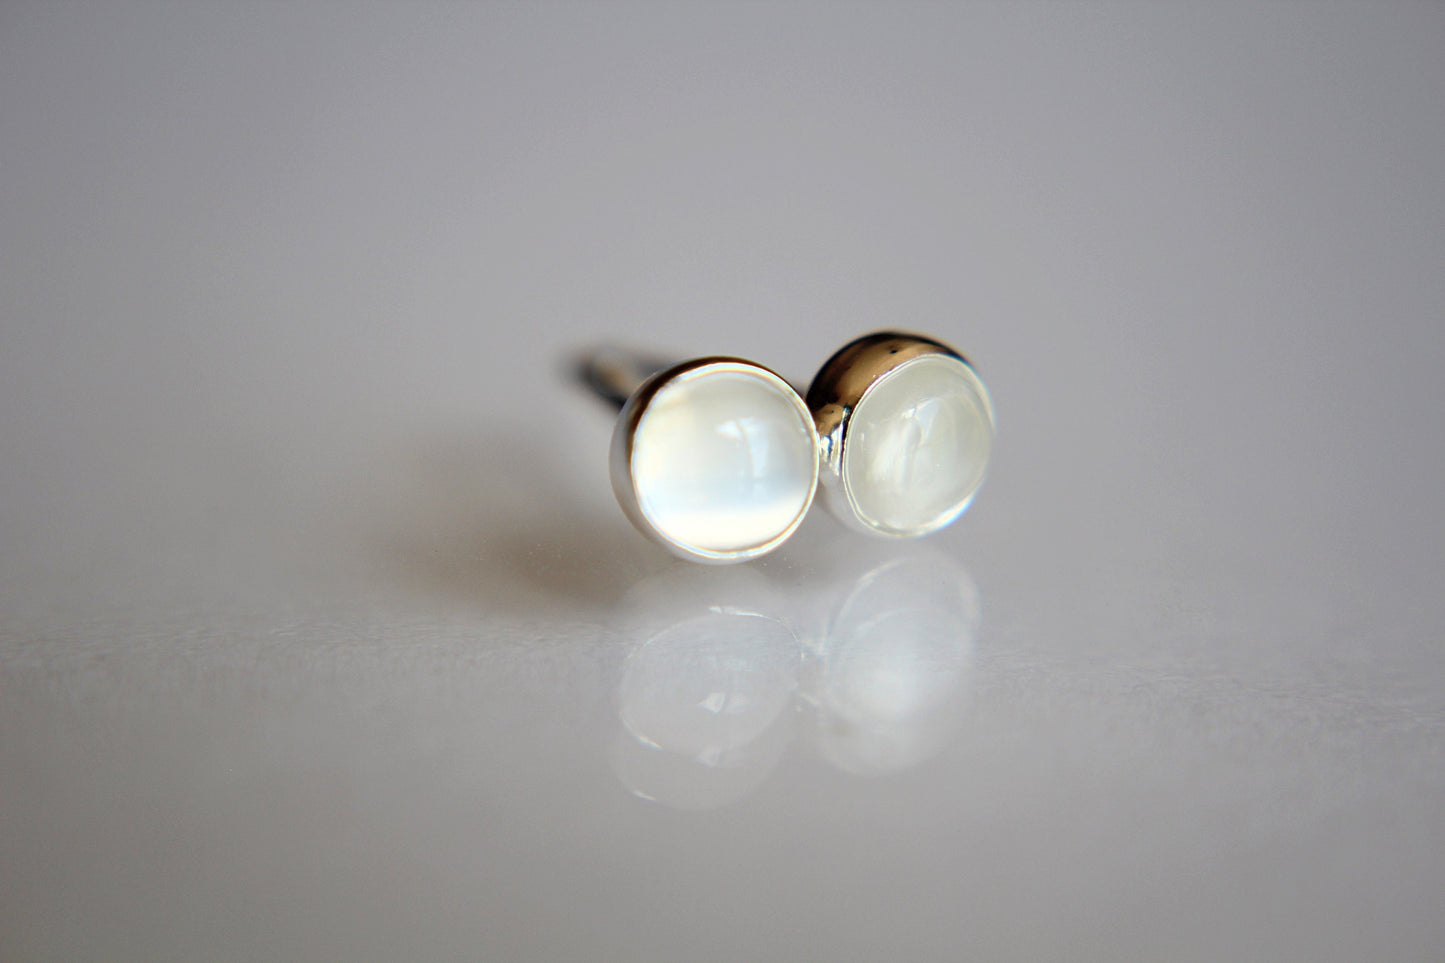 White Moonstone Earrings, Gemstone Earrings, Sterling Earrings, Post Earrings, White Post Earrings, Small Earrings, Minimalist Earrings